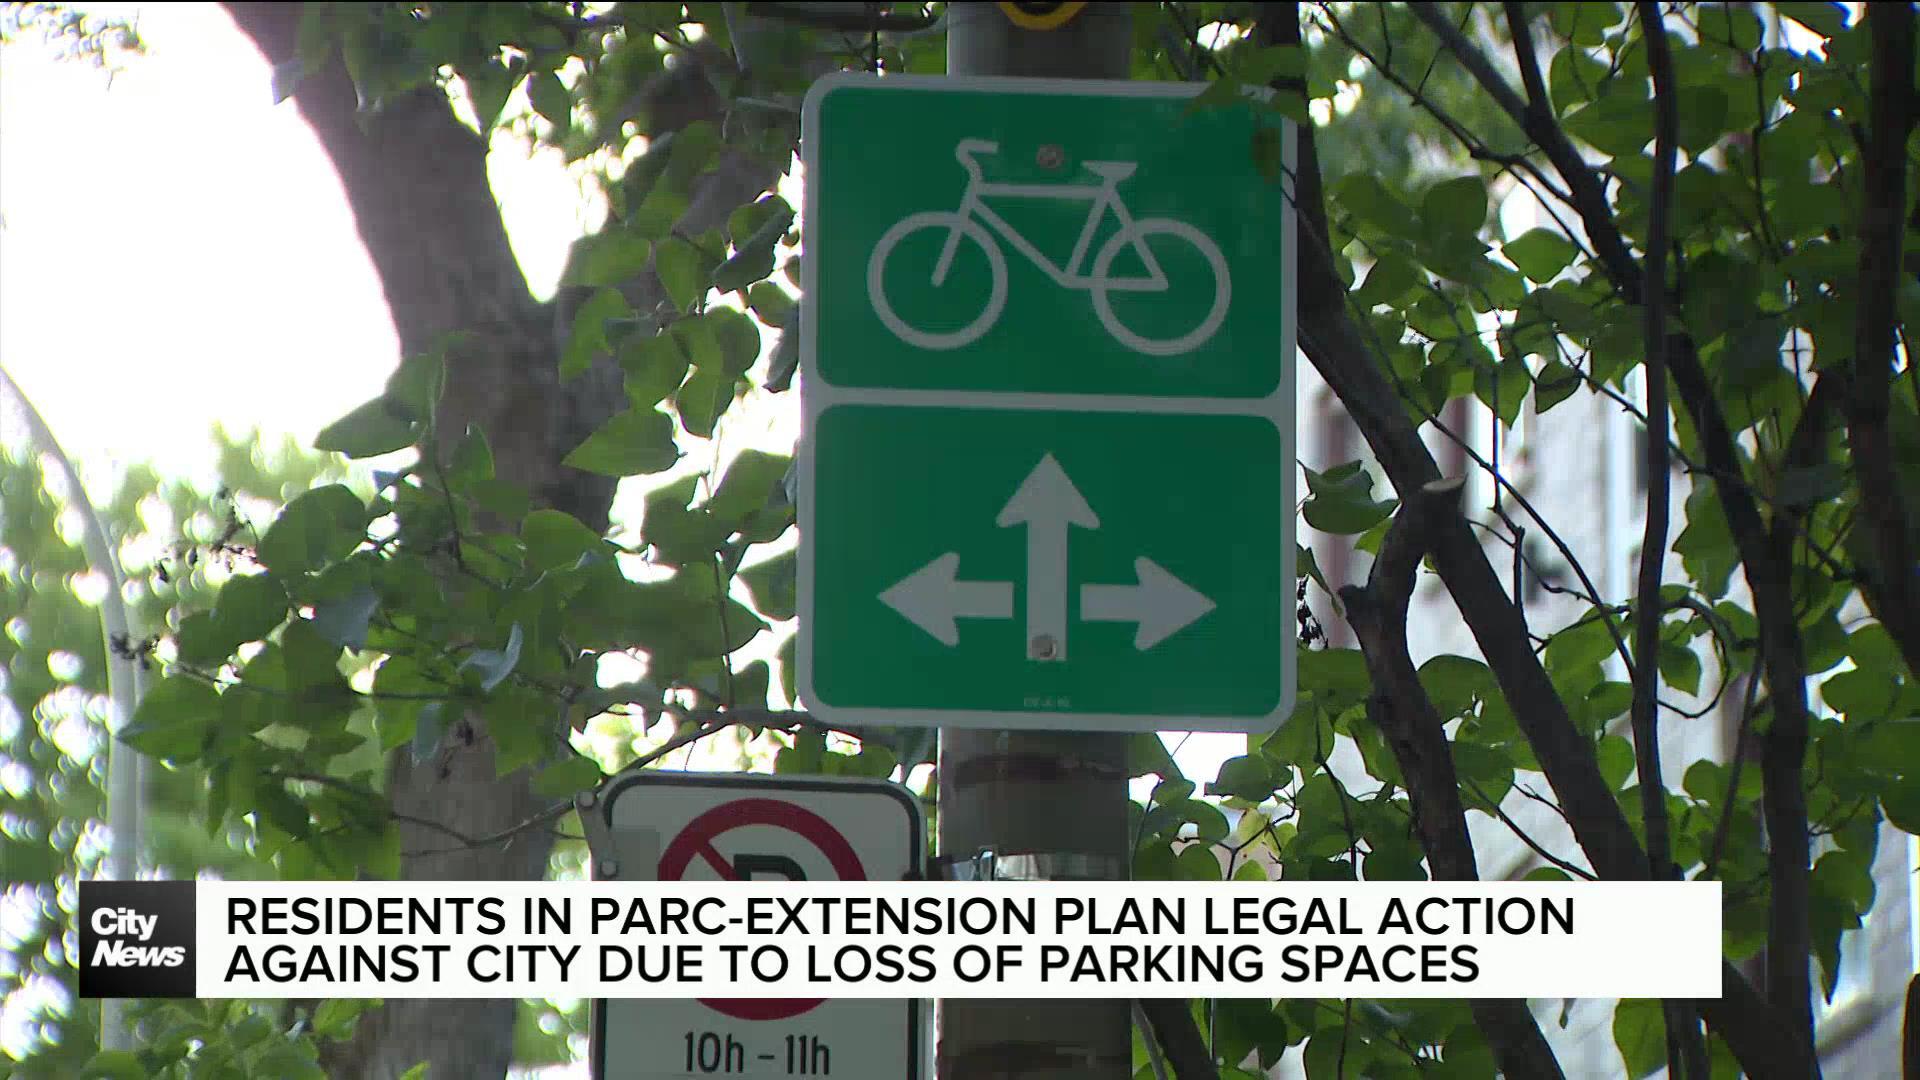 Montreal’s bike lanes spark legal battle over parking loss